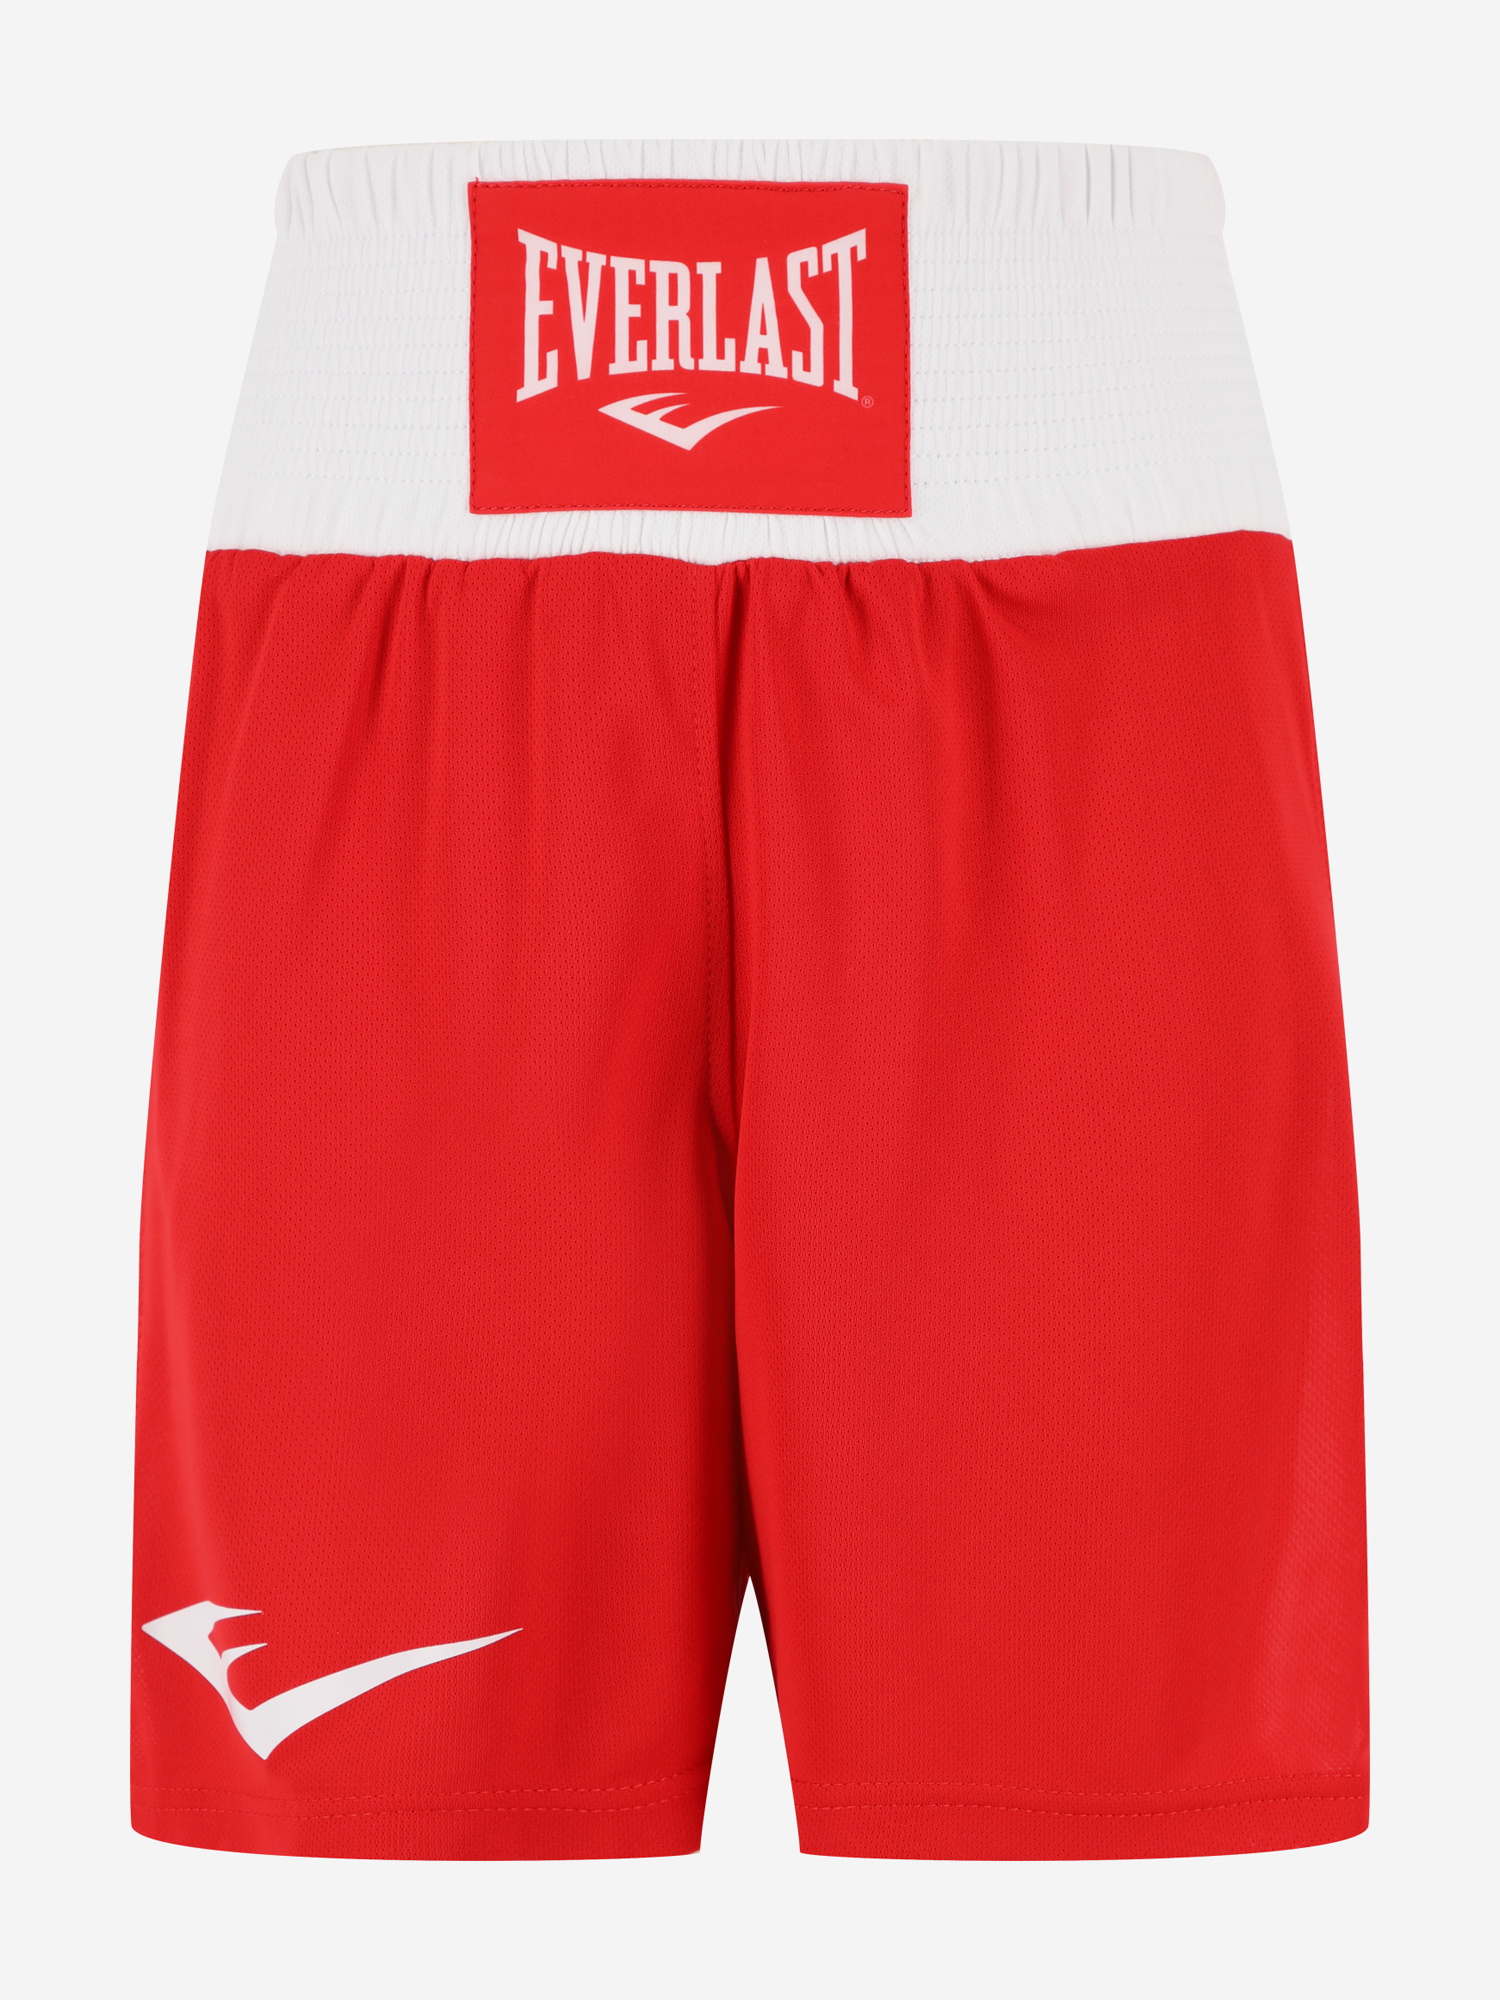 Шорты для бокса детские Everlast Elite, Красный шапка everlast wagner light серый